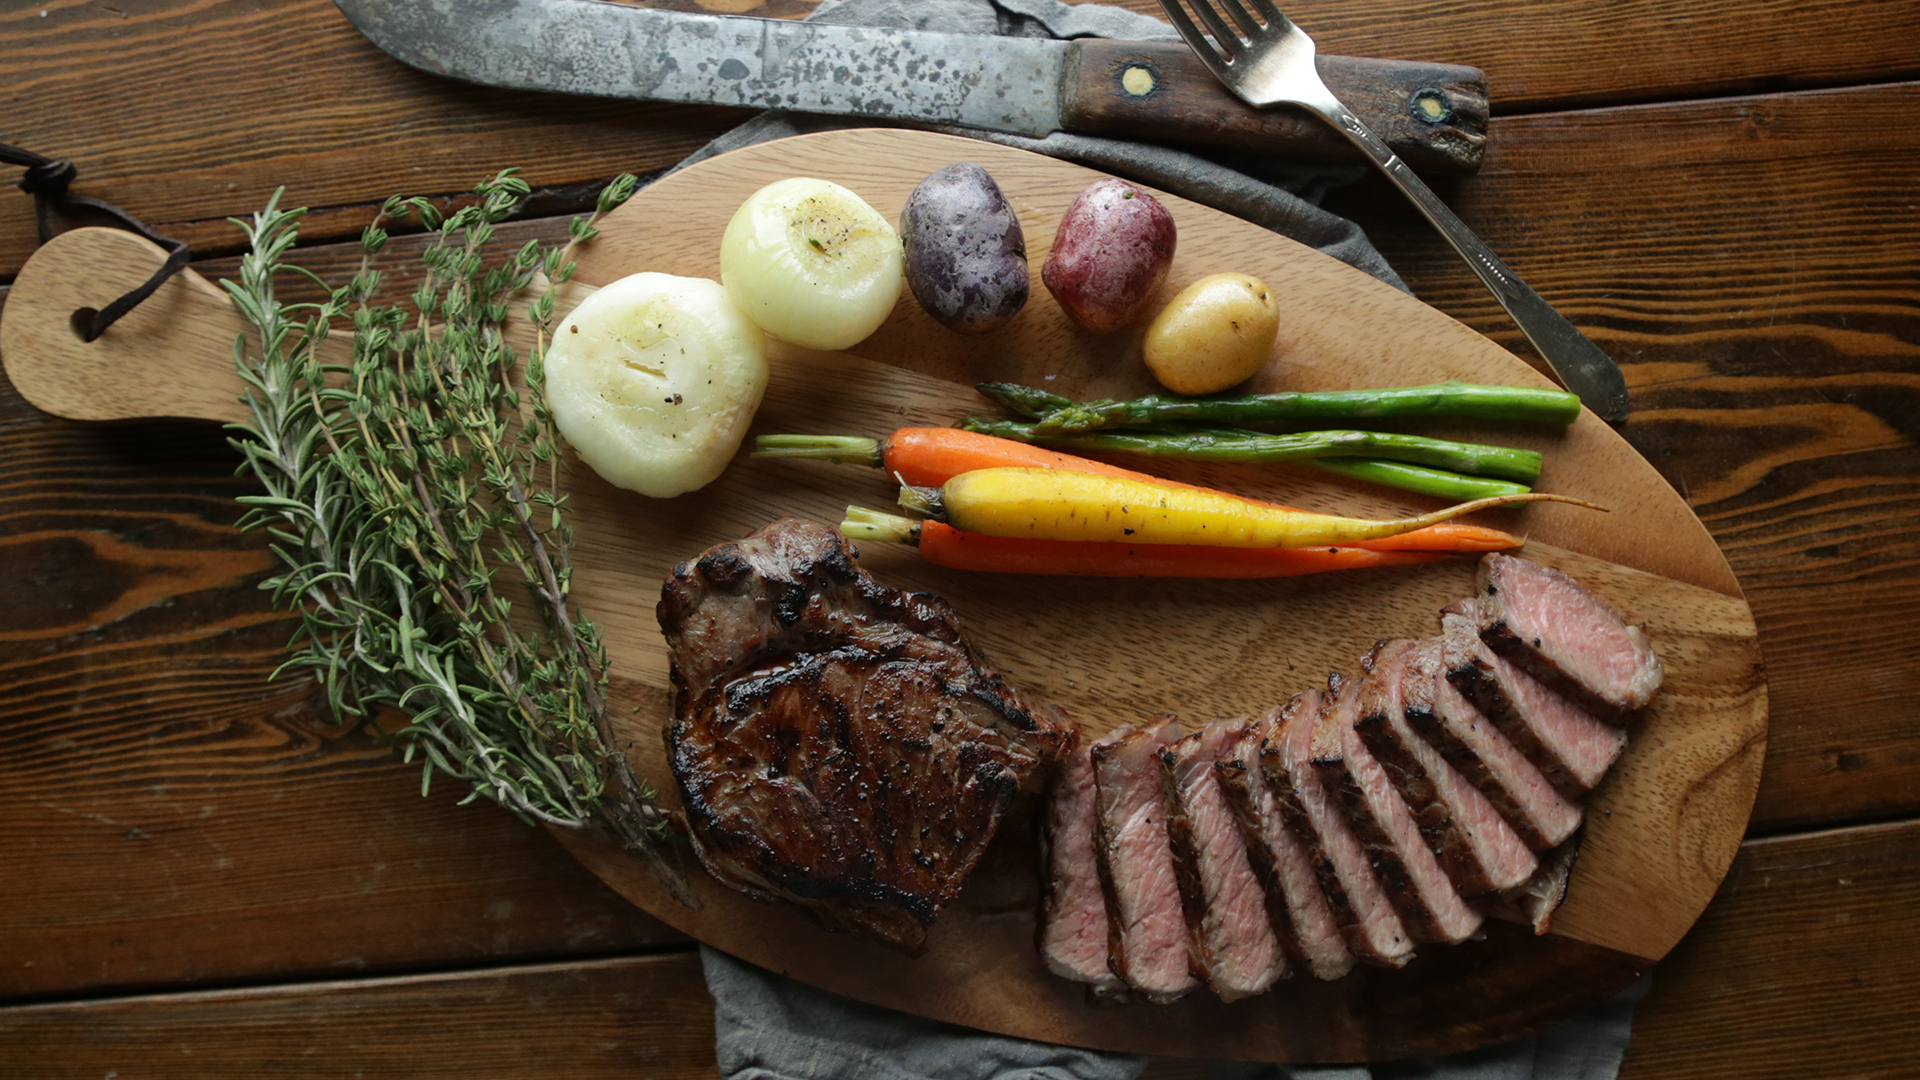 How to Make Sous Vide Steak & Vegetables